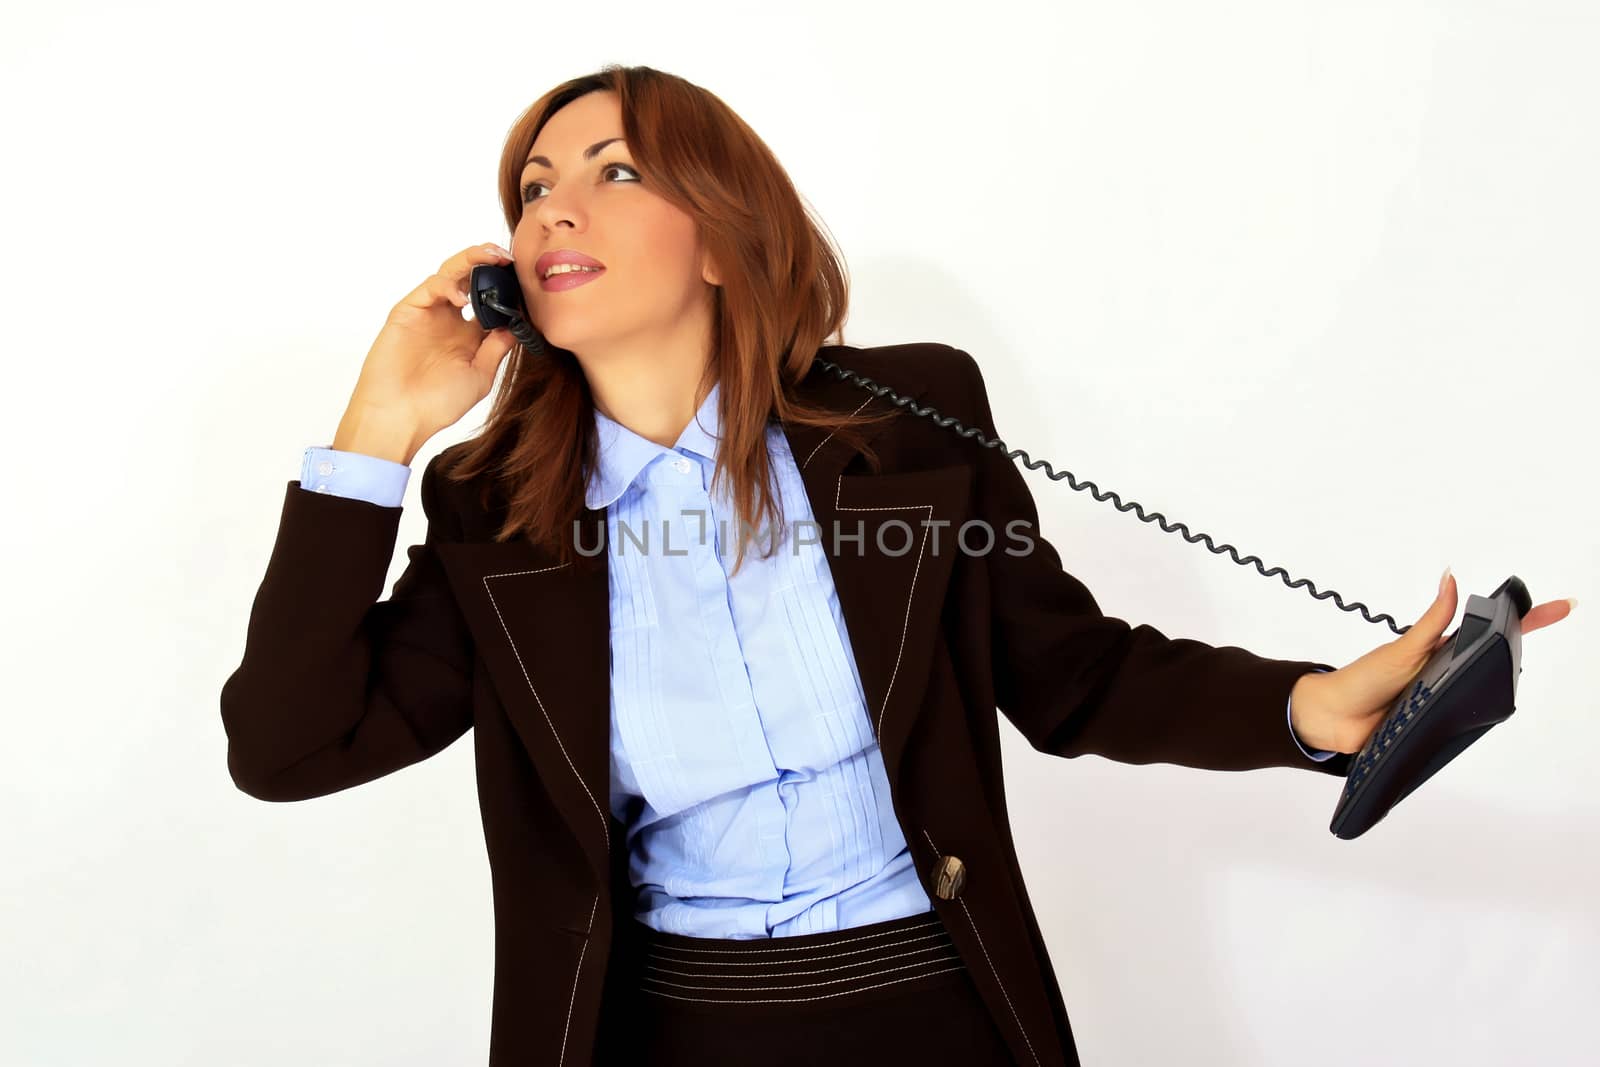 Businesswoman on the phone by dukibu